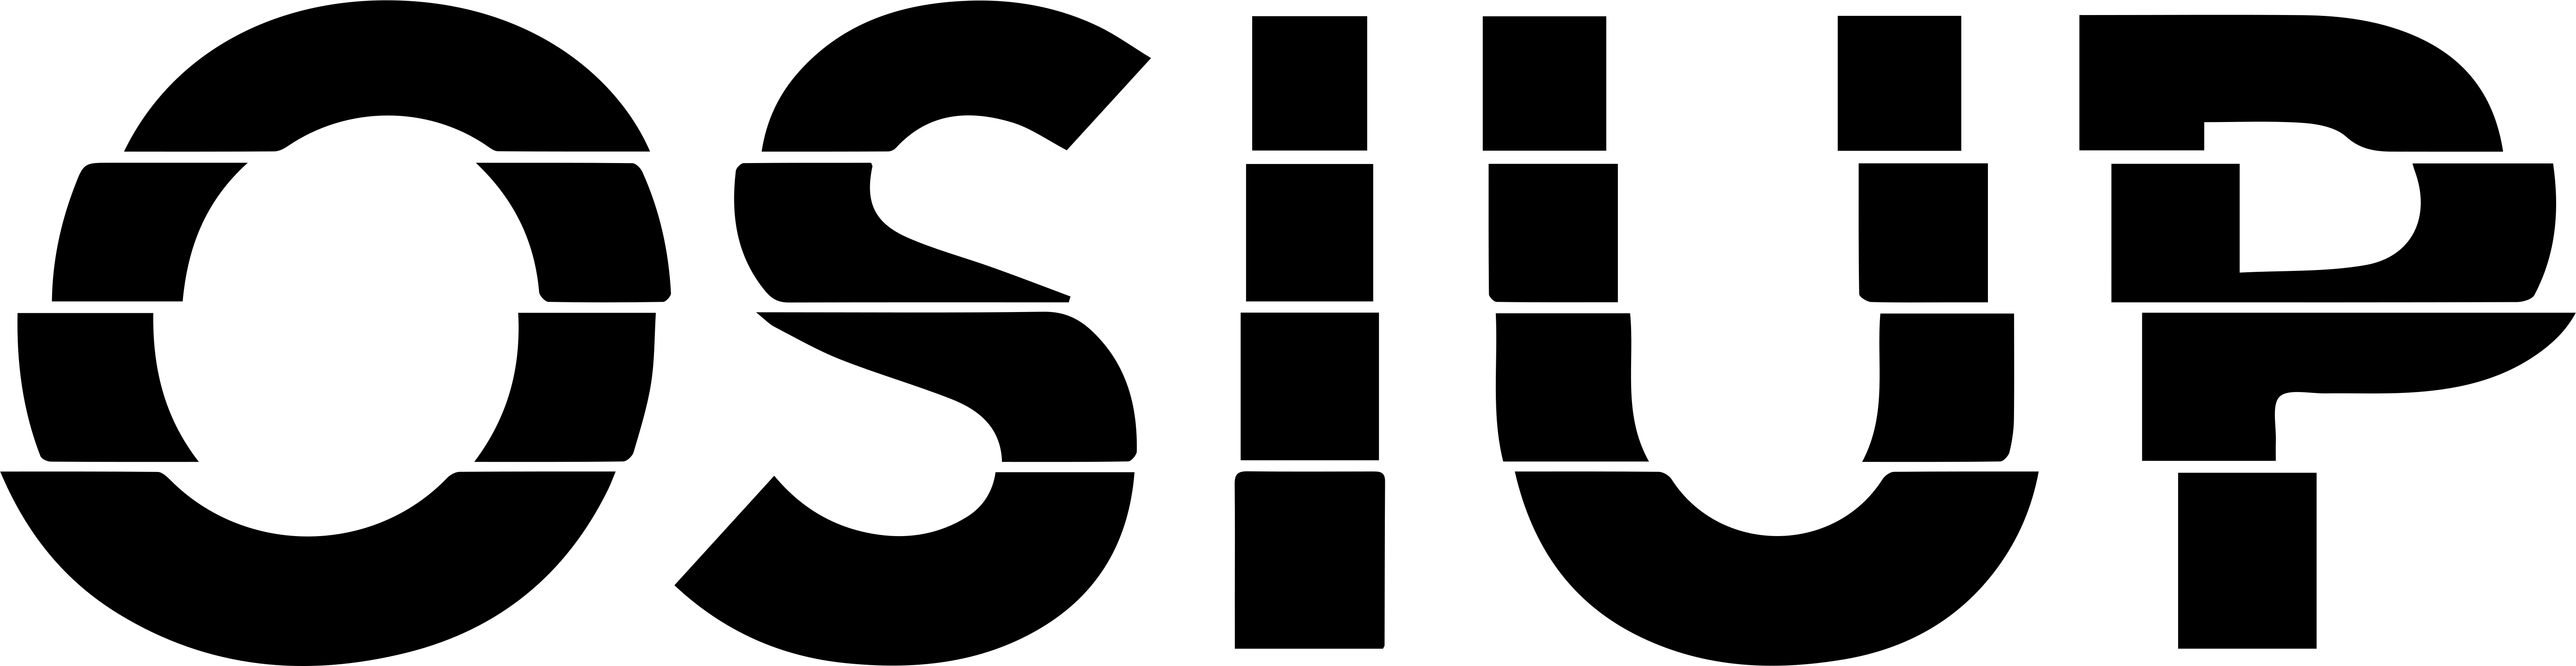 OSIUP logo